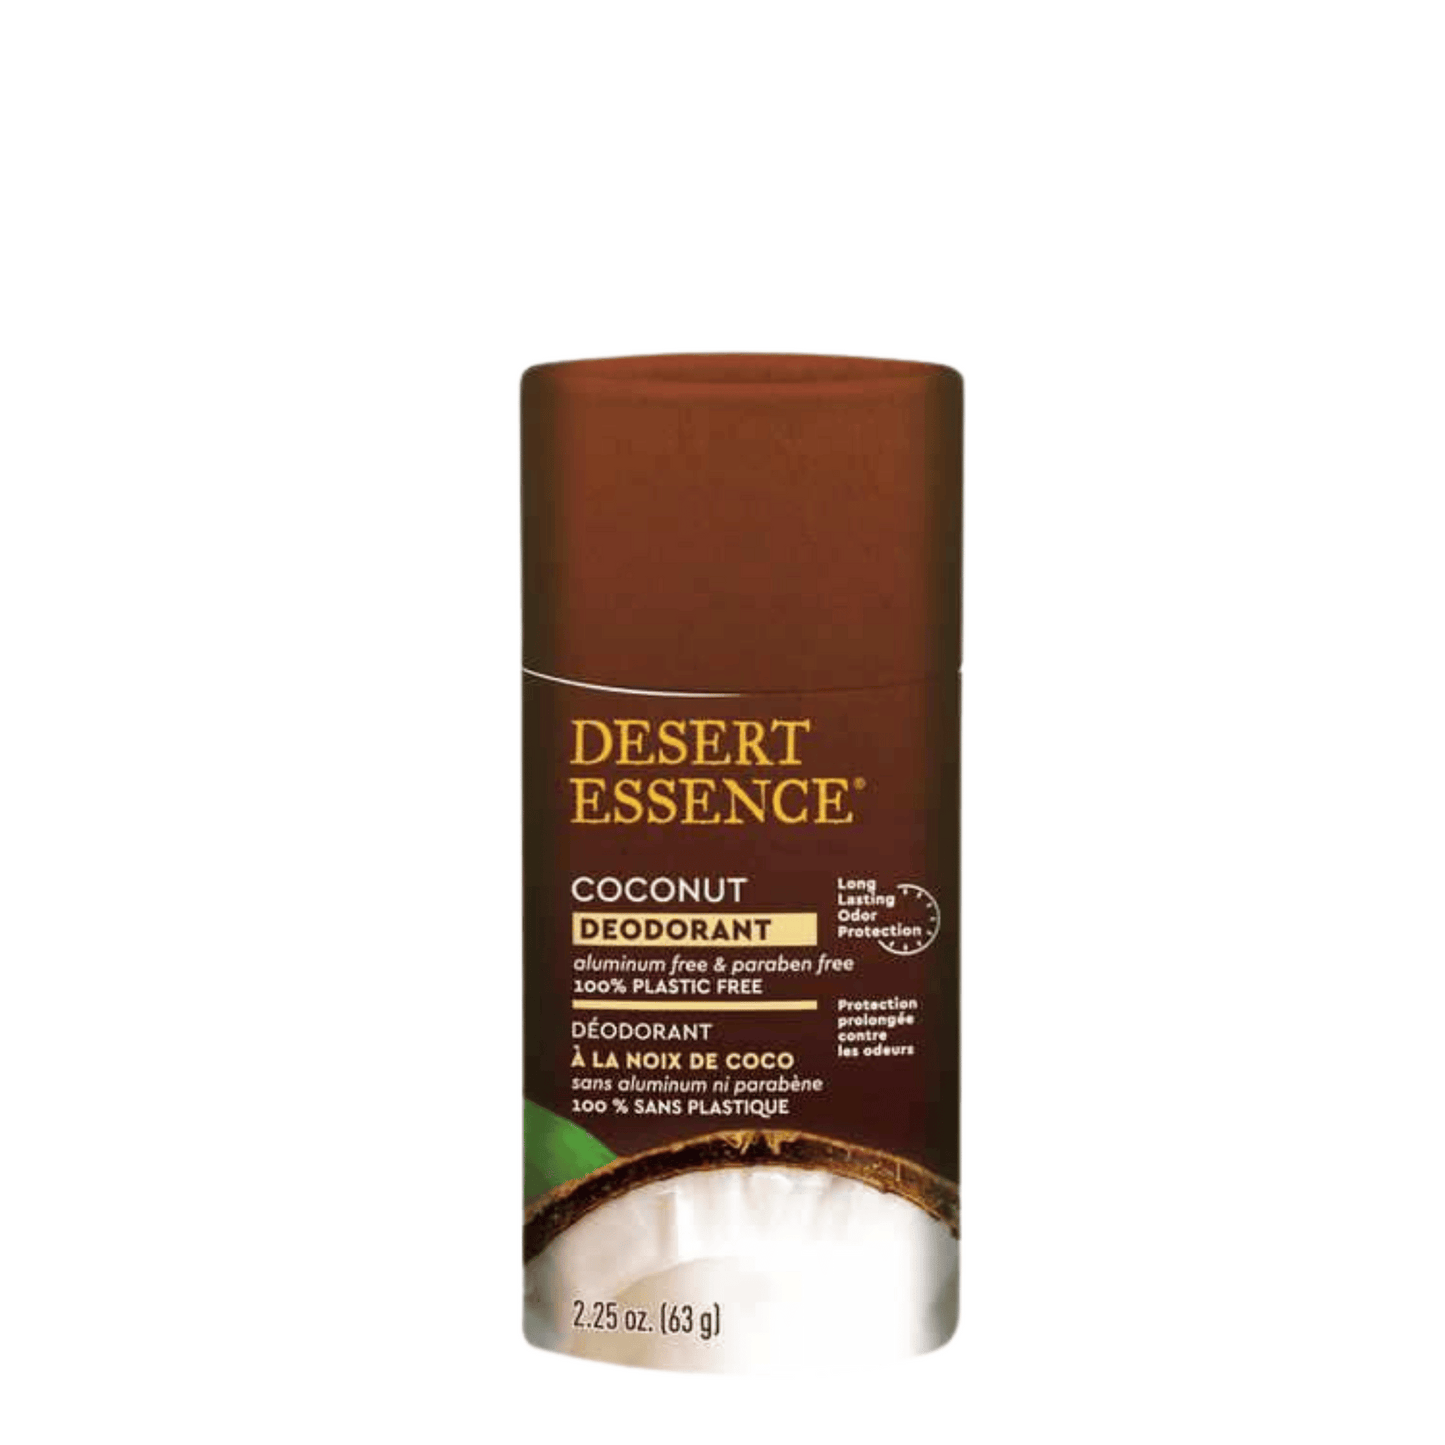 Primary Image of Coconut Deodorant